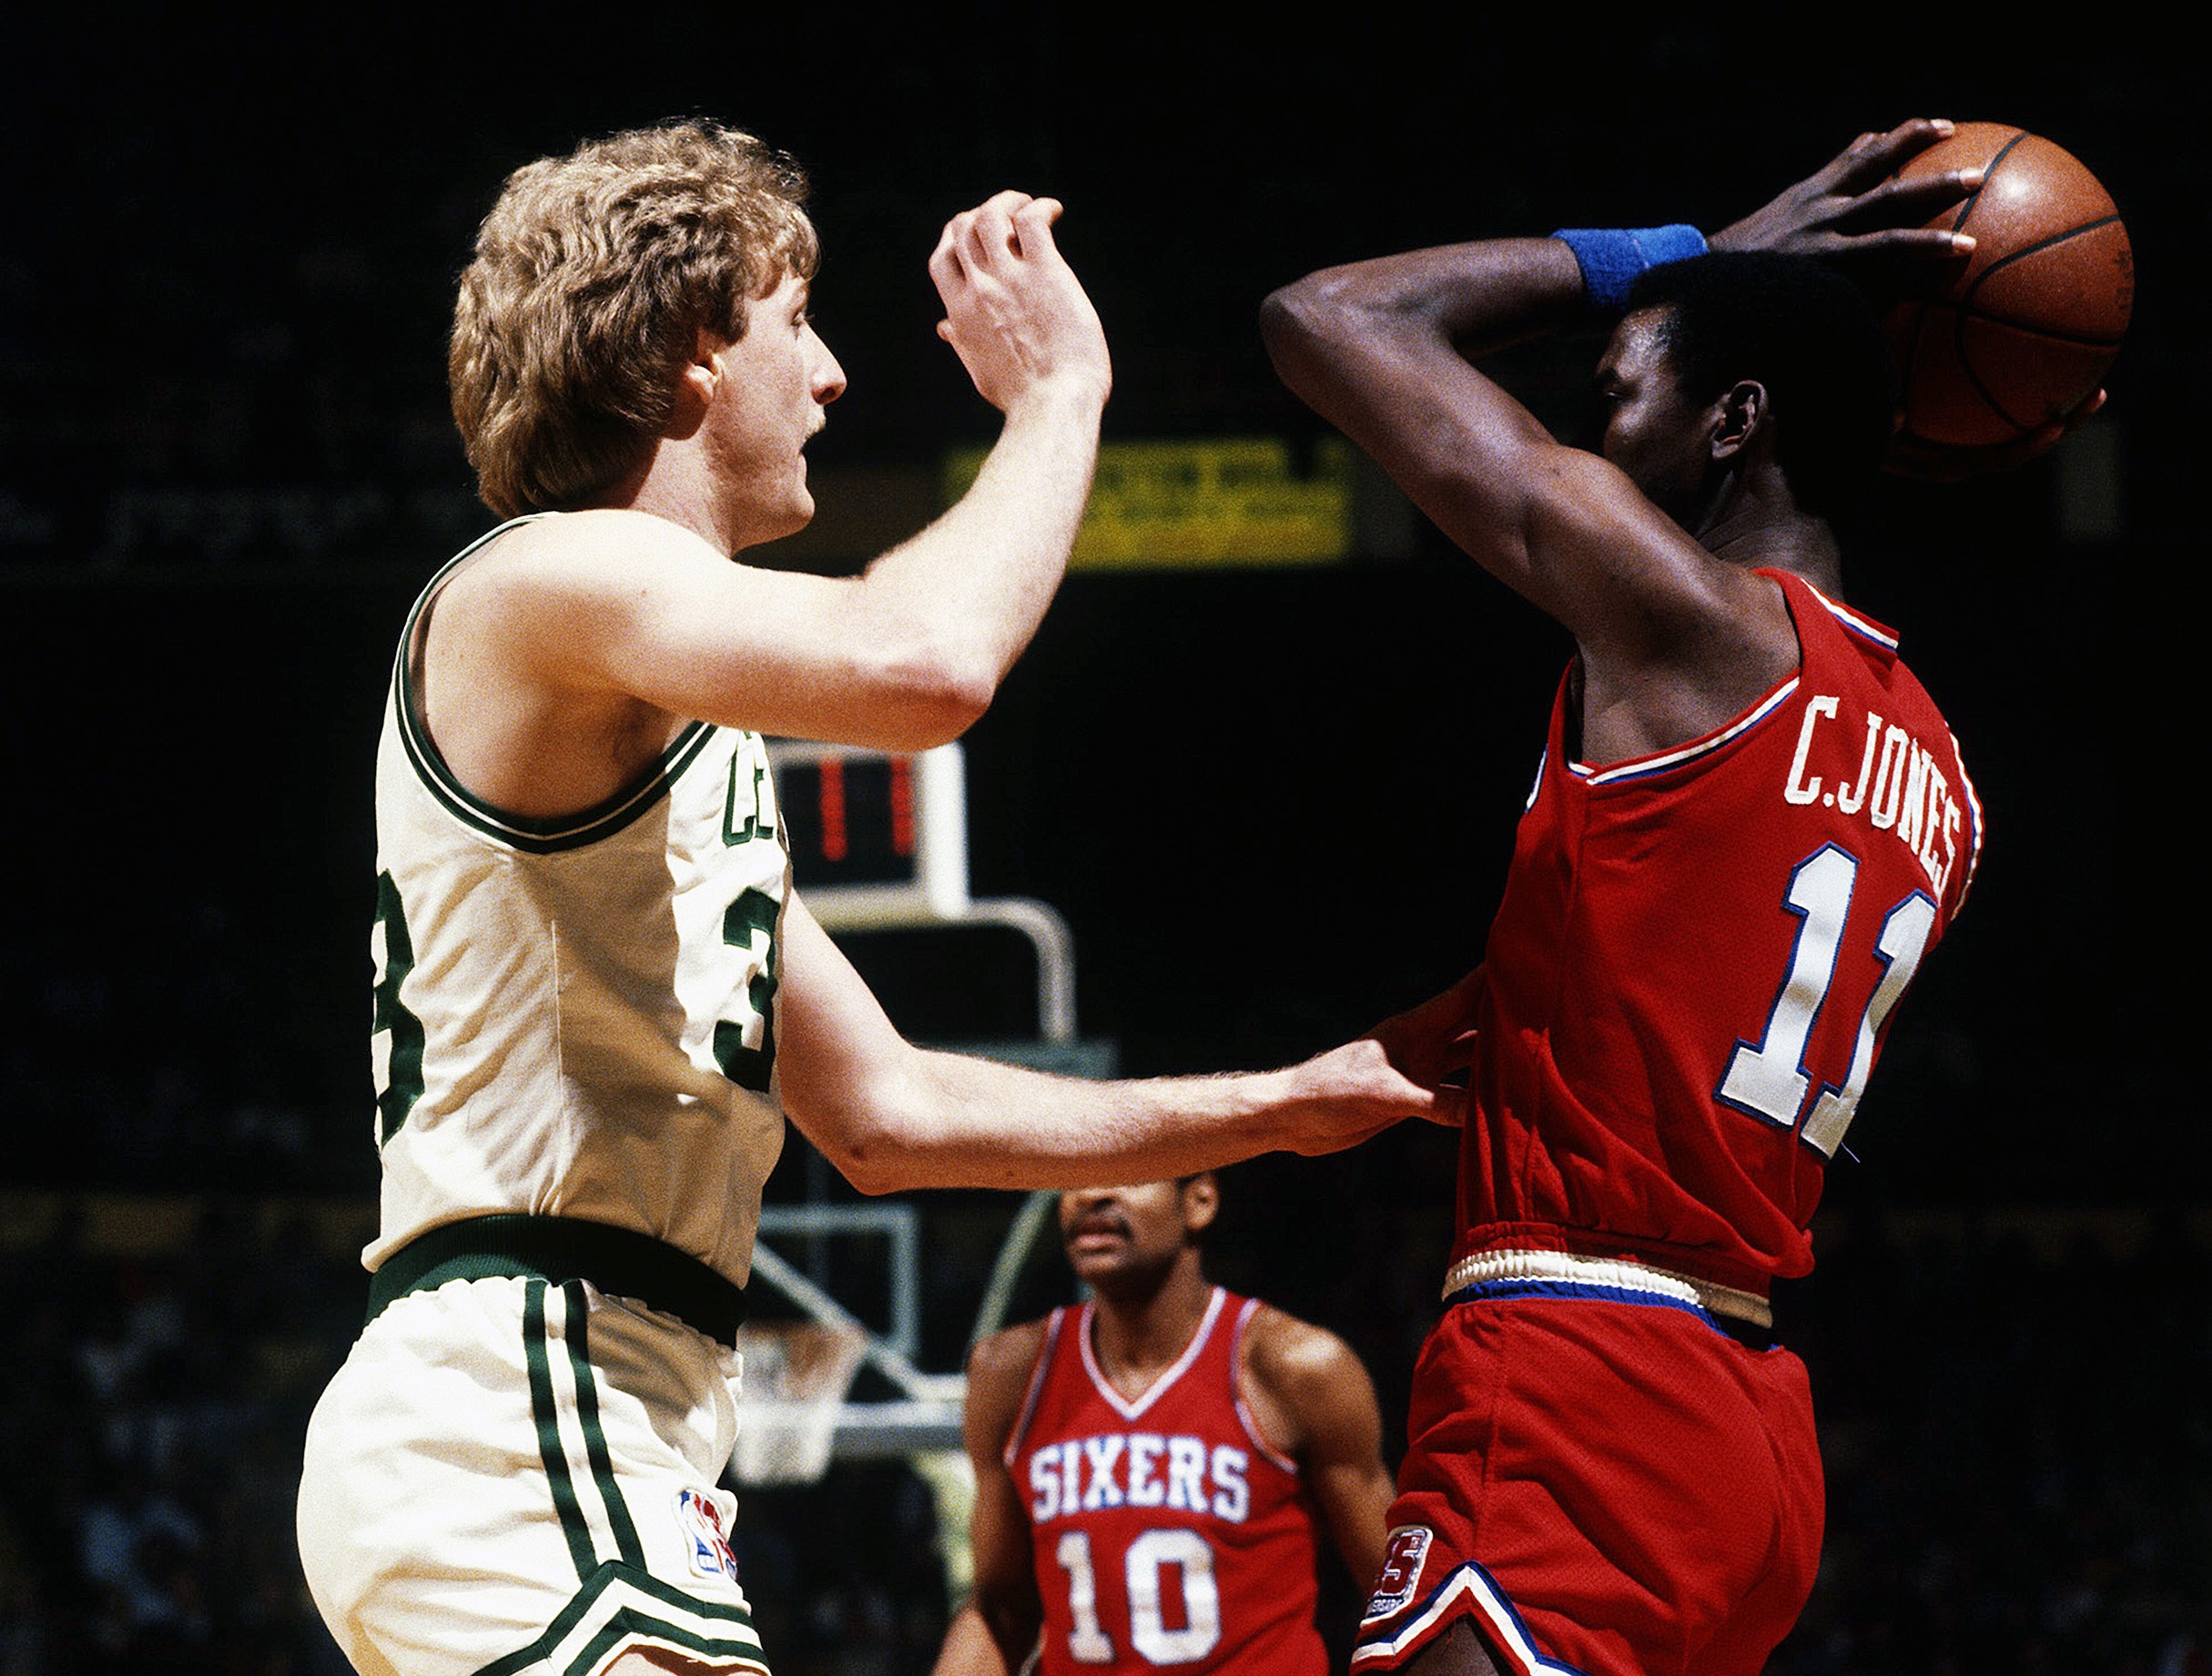 Caldwell Jones of the Philadelphia 76ers looks to pass the ball over the top of Larry Bird of the Boston Celtics.